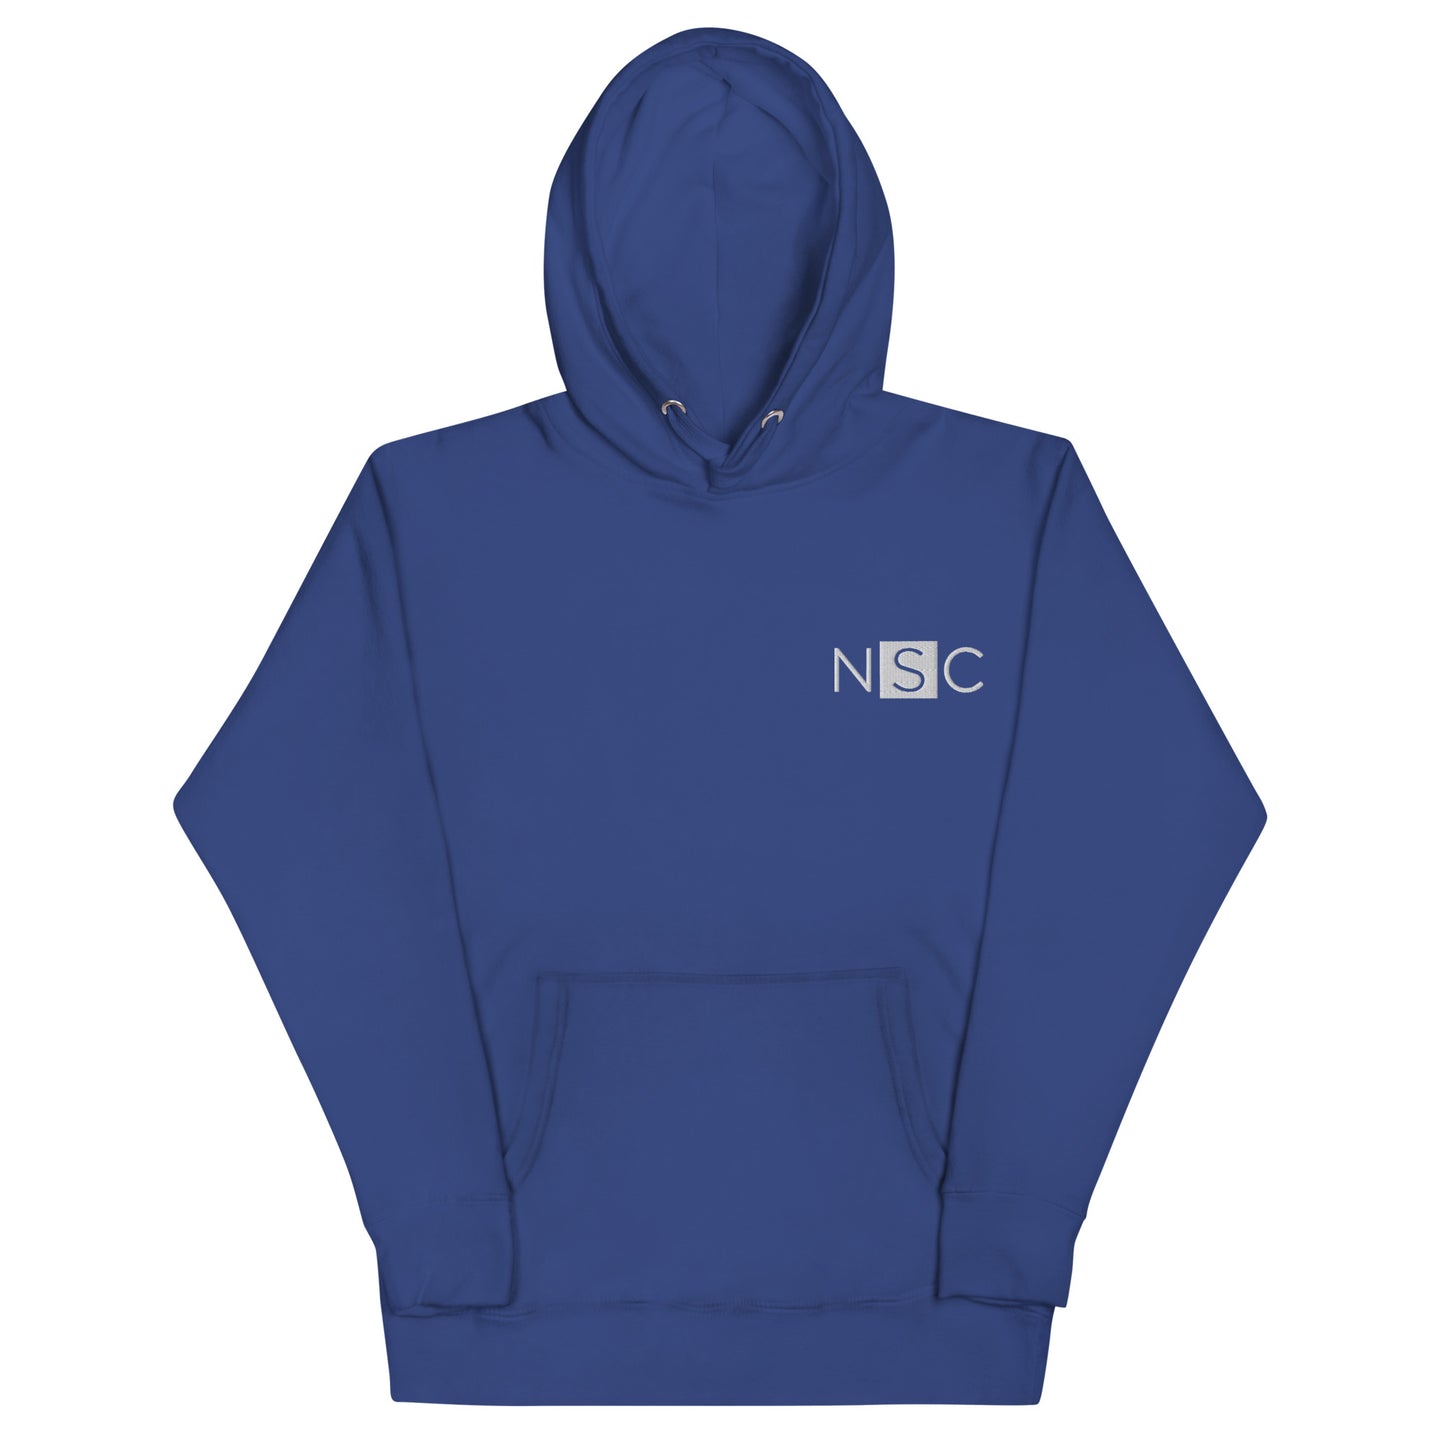 Nashville Sampling Co (NSC) Embroidered Unisex Hoodie